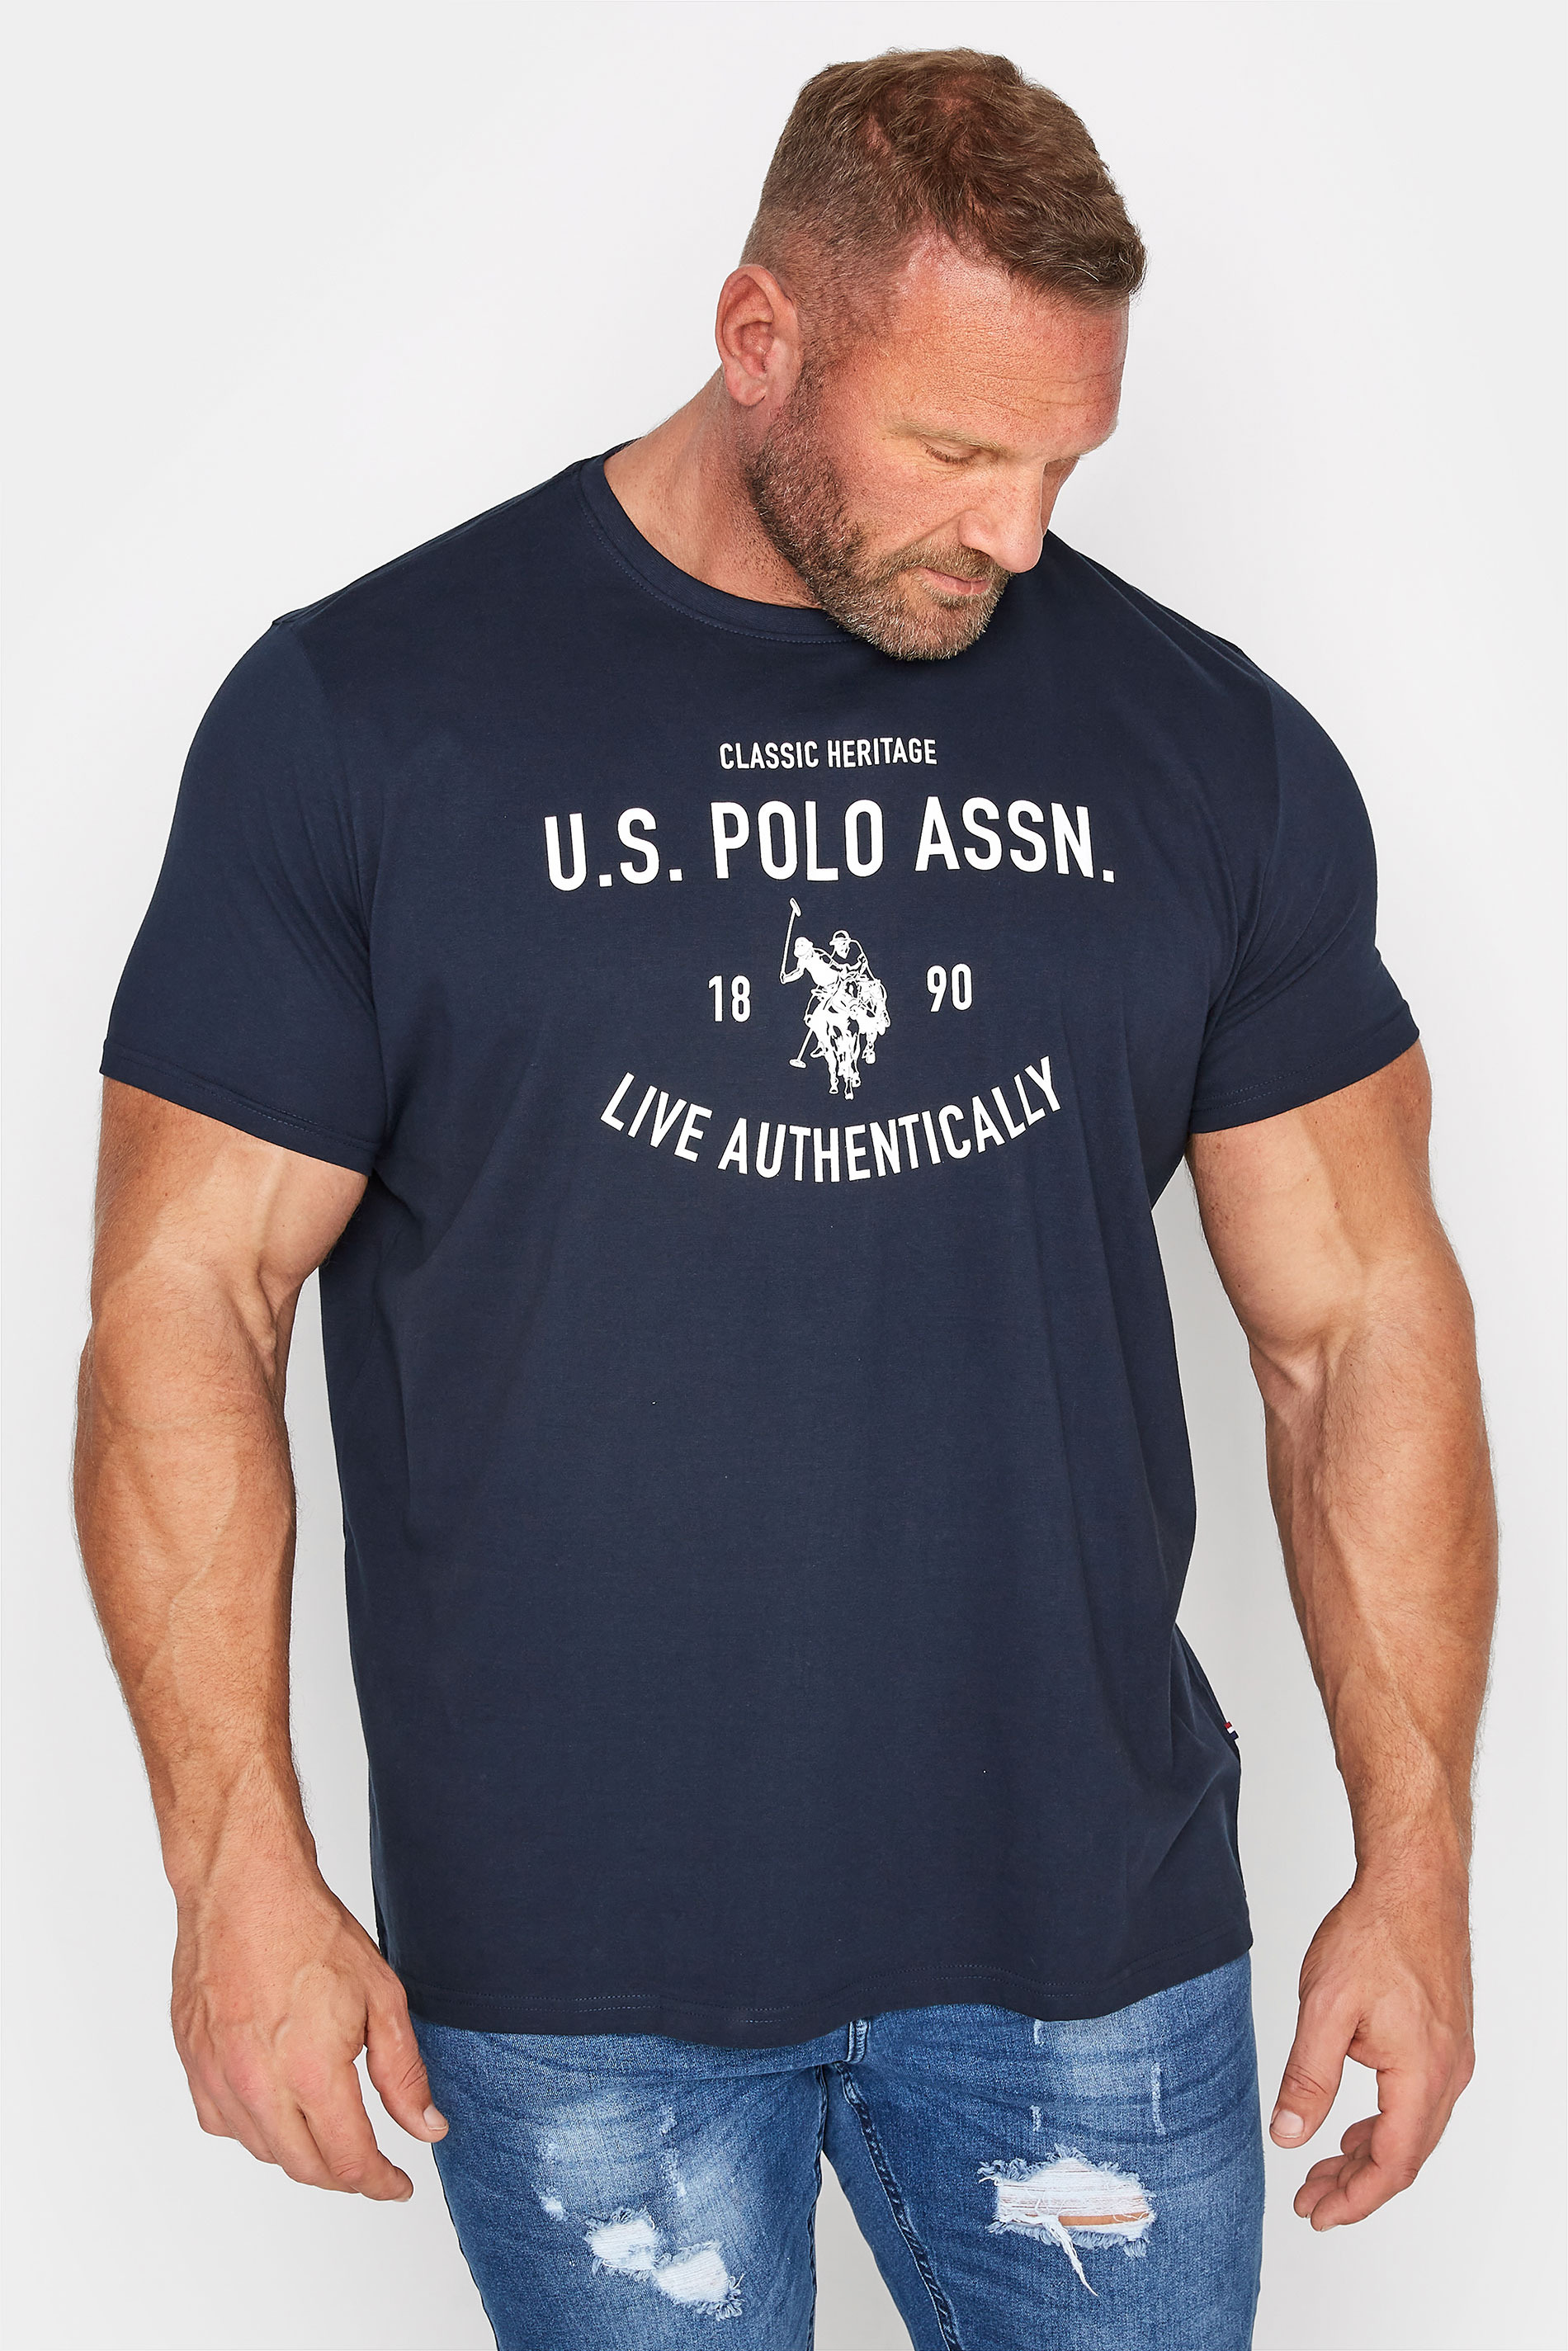 U.S. POLO ASSN. Big & Tall Navy Blue Classic Heritage T-Shirt 1